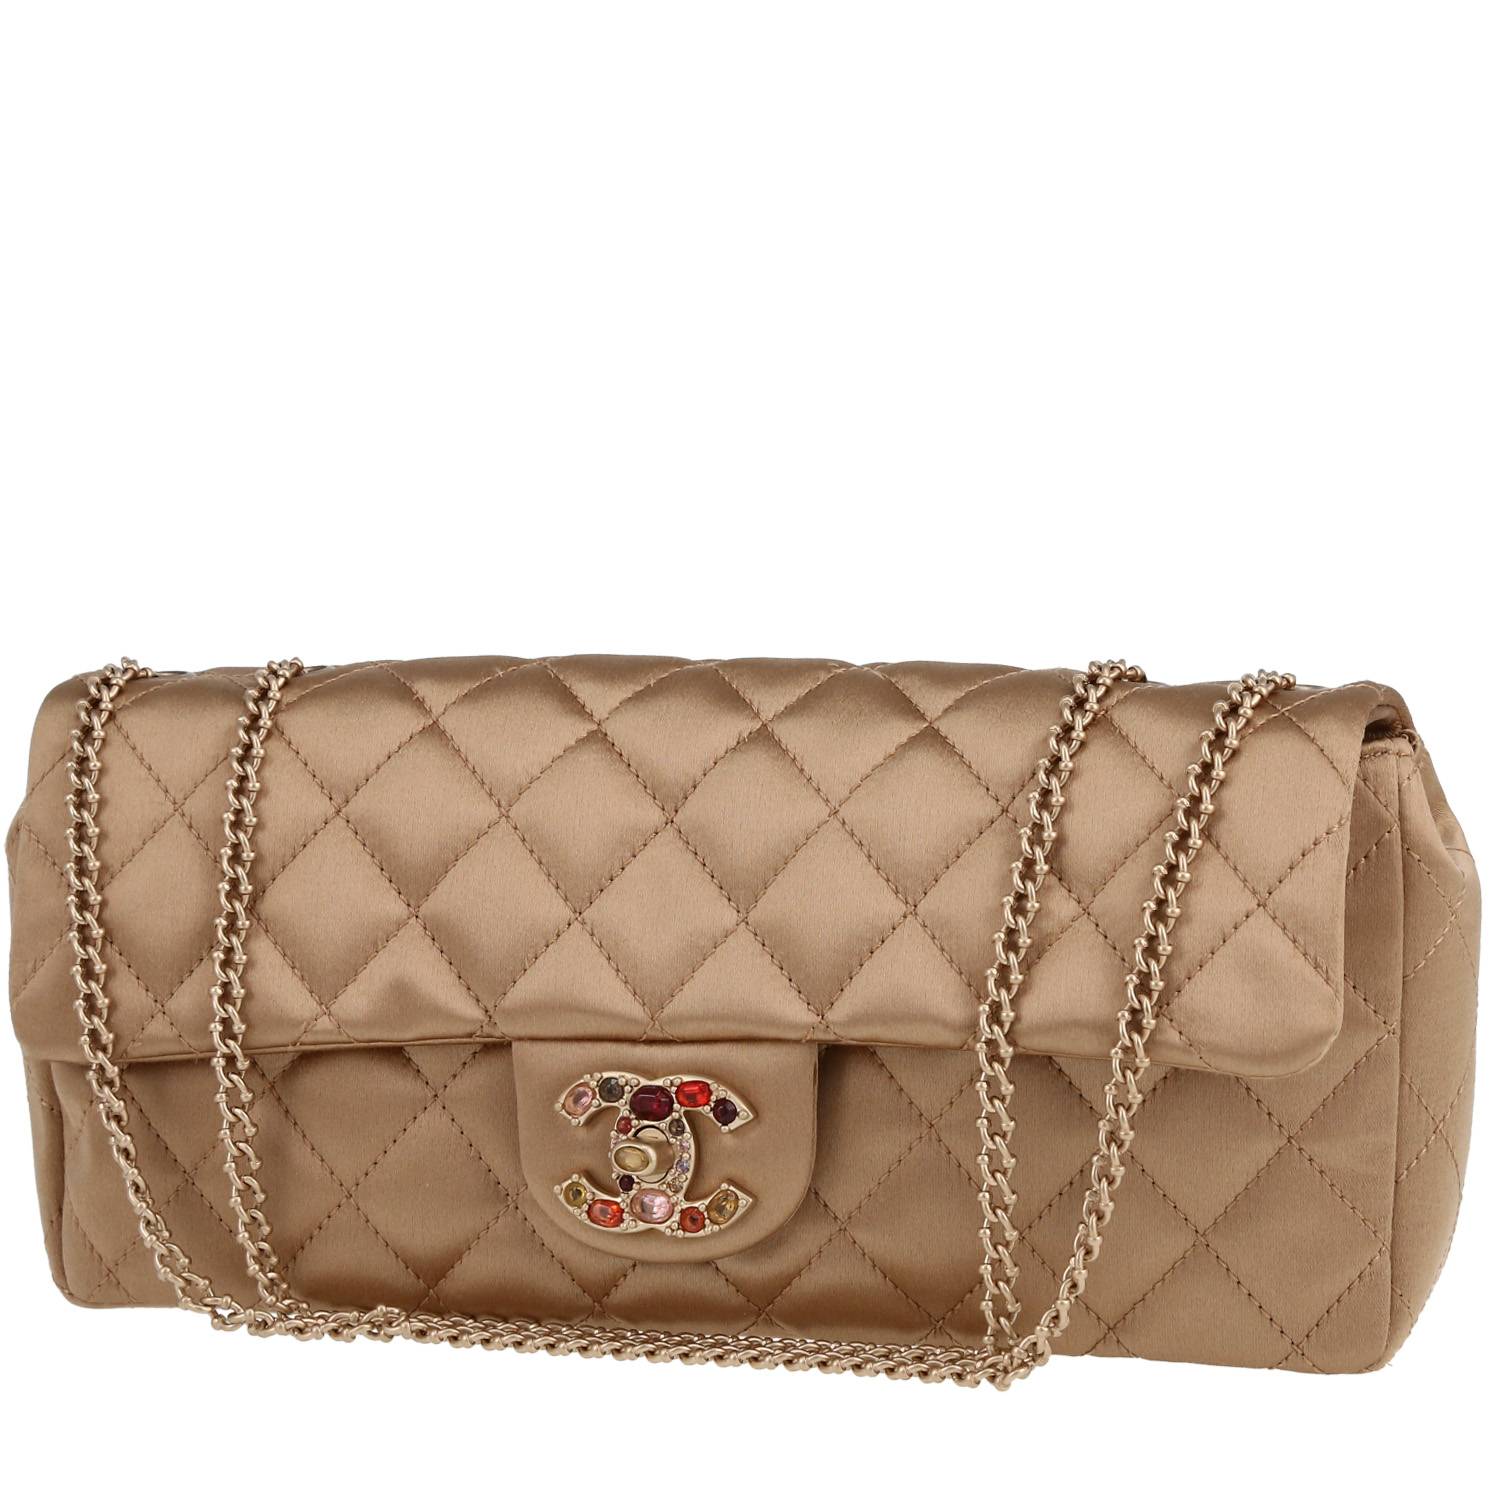 Chanel Baguette Handbag 403925 | FonjepShops | Marni leather nano bag